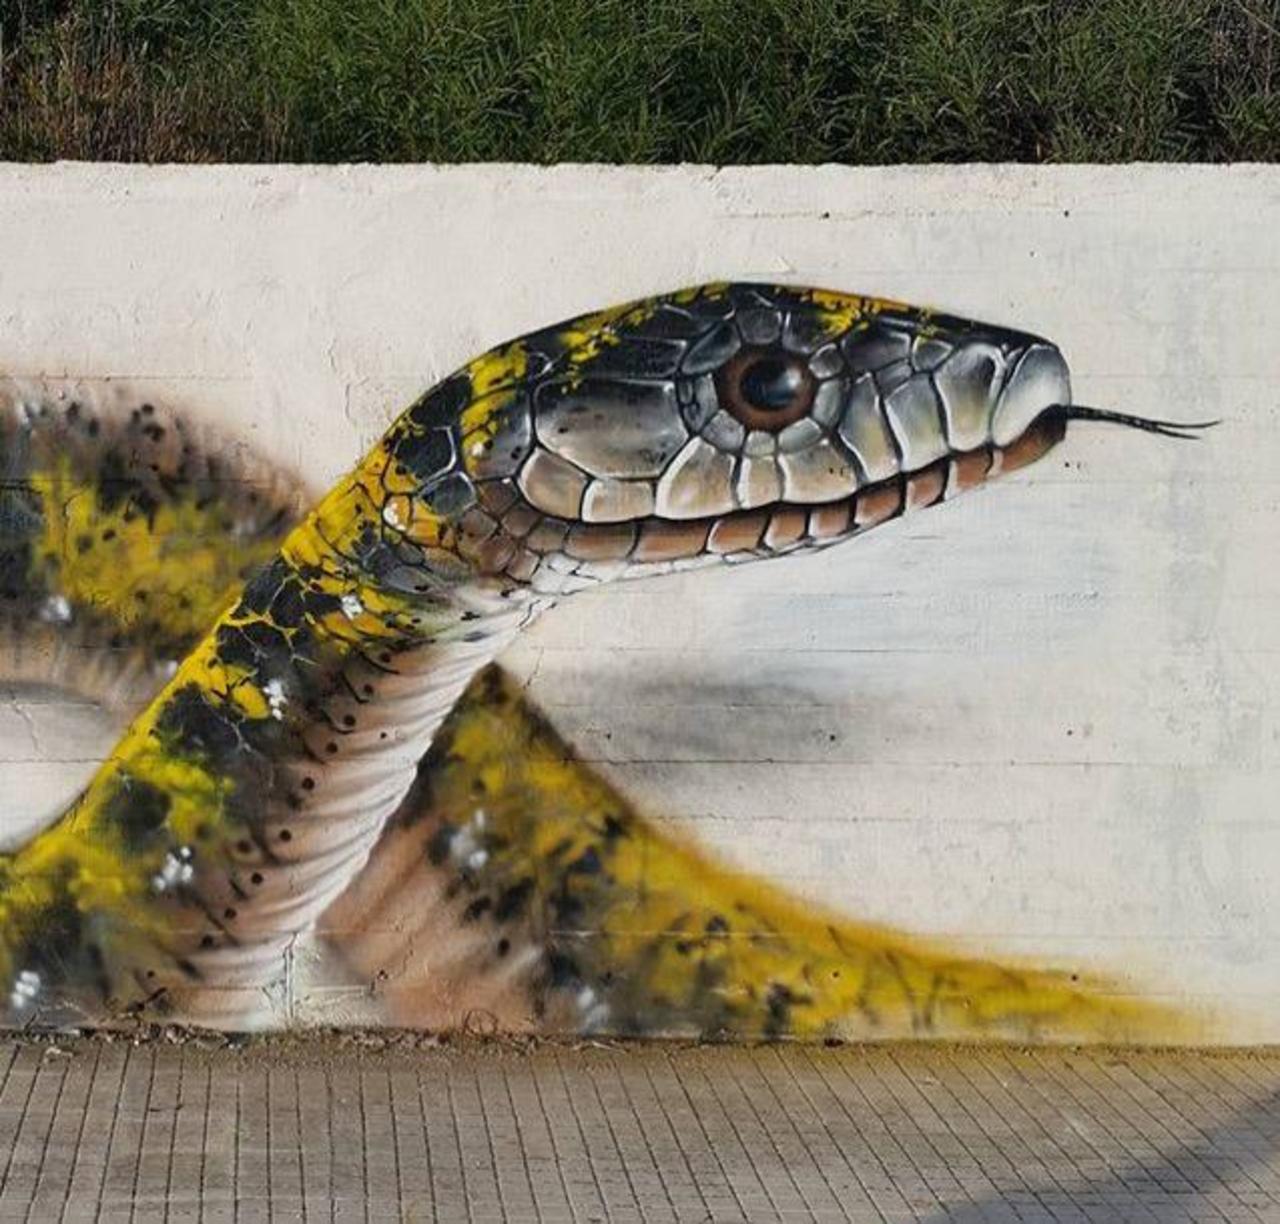 Street Art by Cosimocheone 

#art #graffiti #mural #streetart http://t.co/sYY4AIJoi6